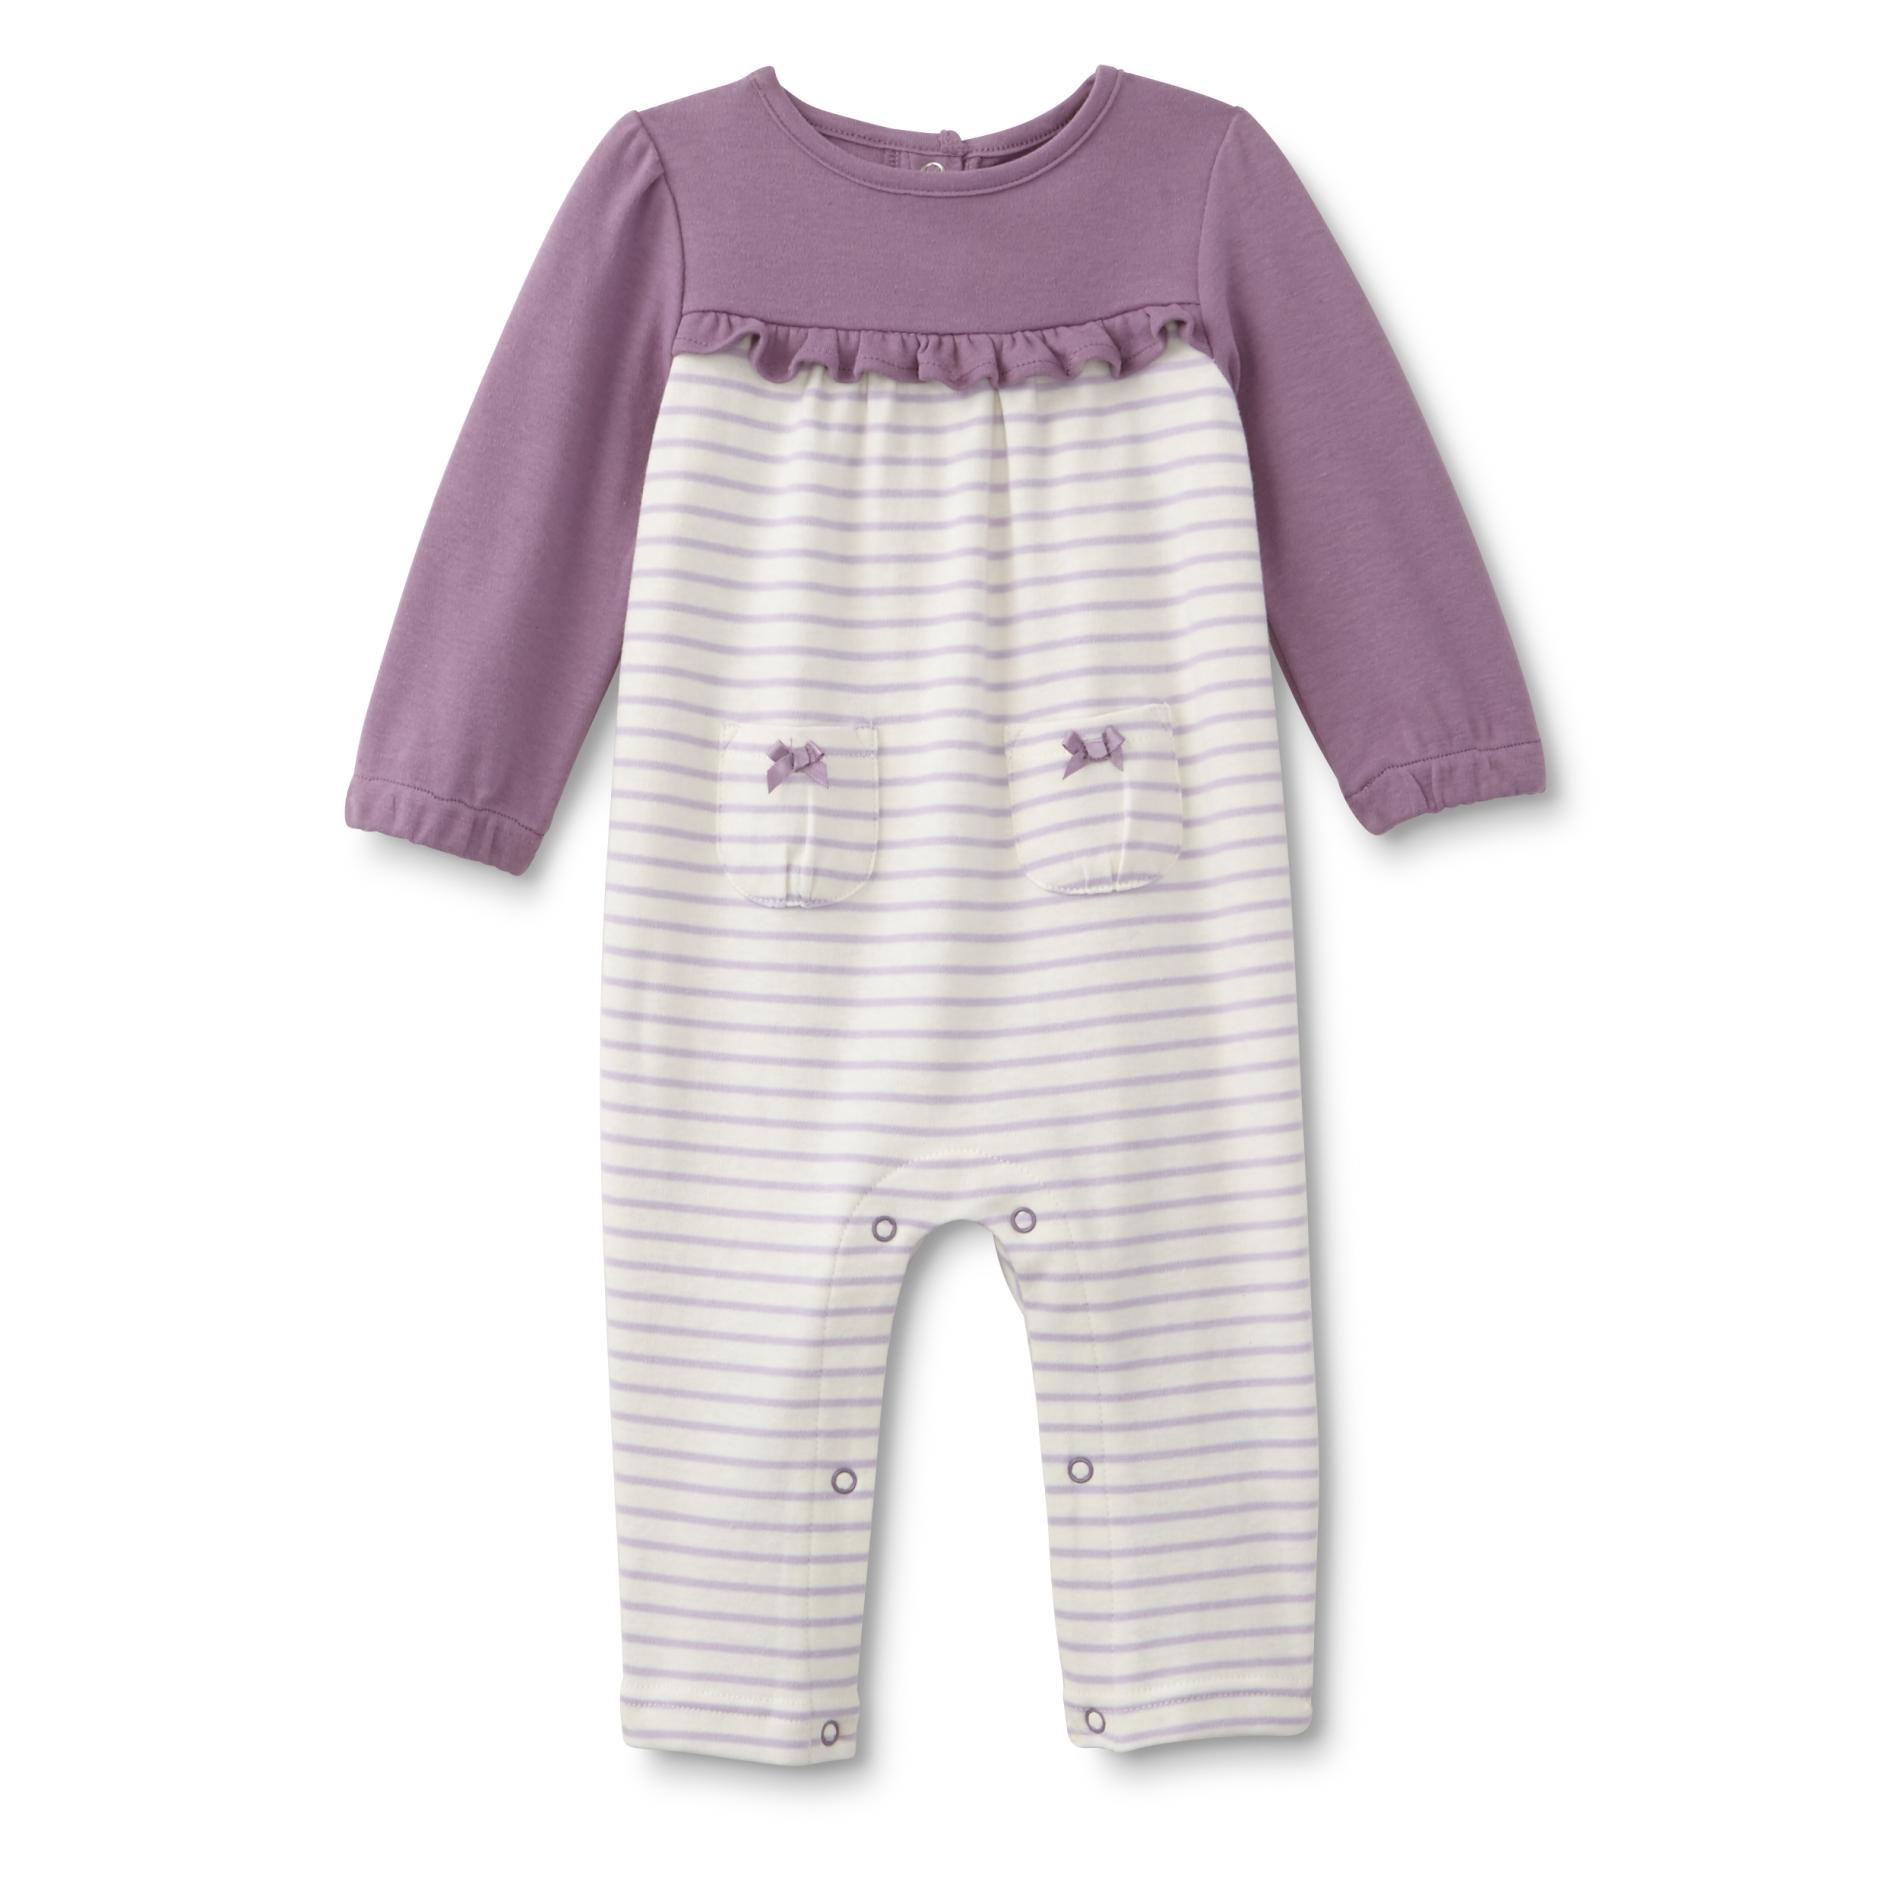 Little Wonders Newborn & Infant Girl's Jumpsuit - Striped